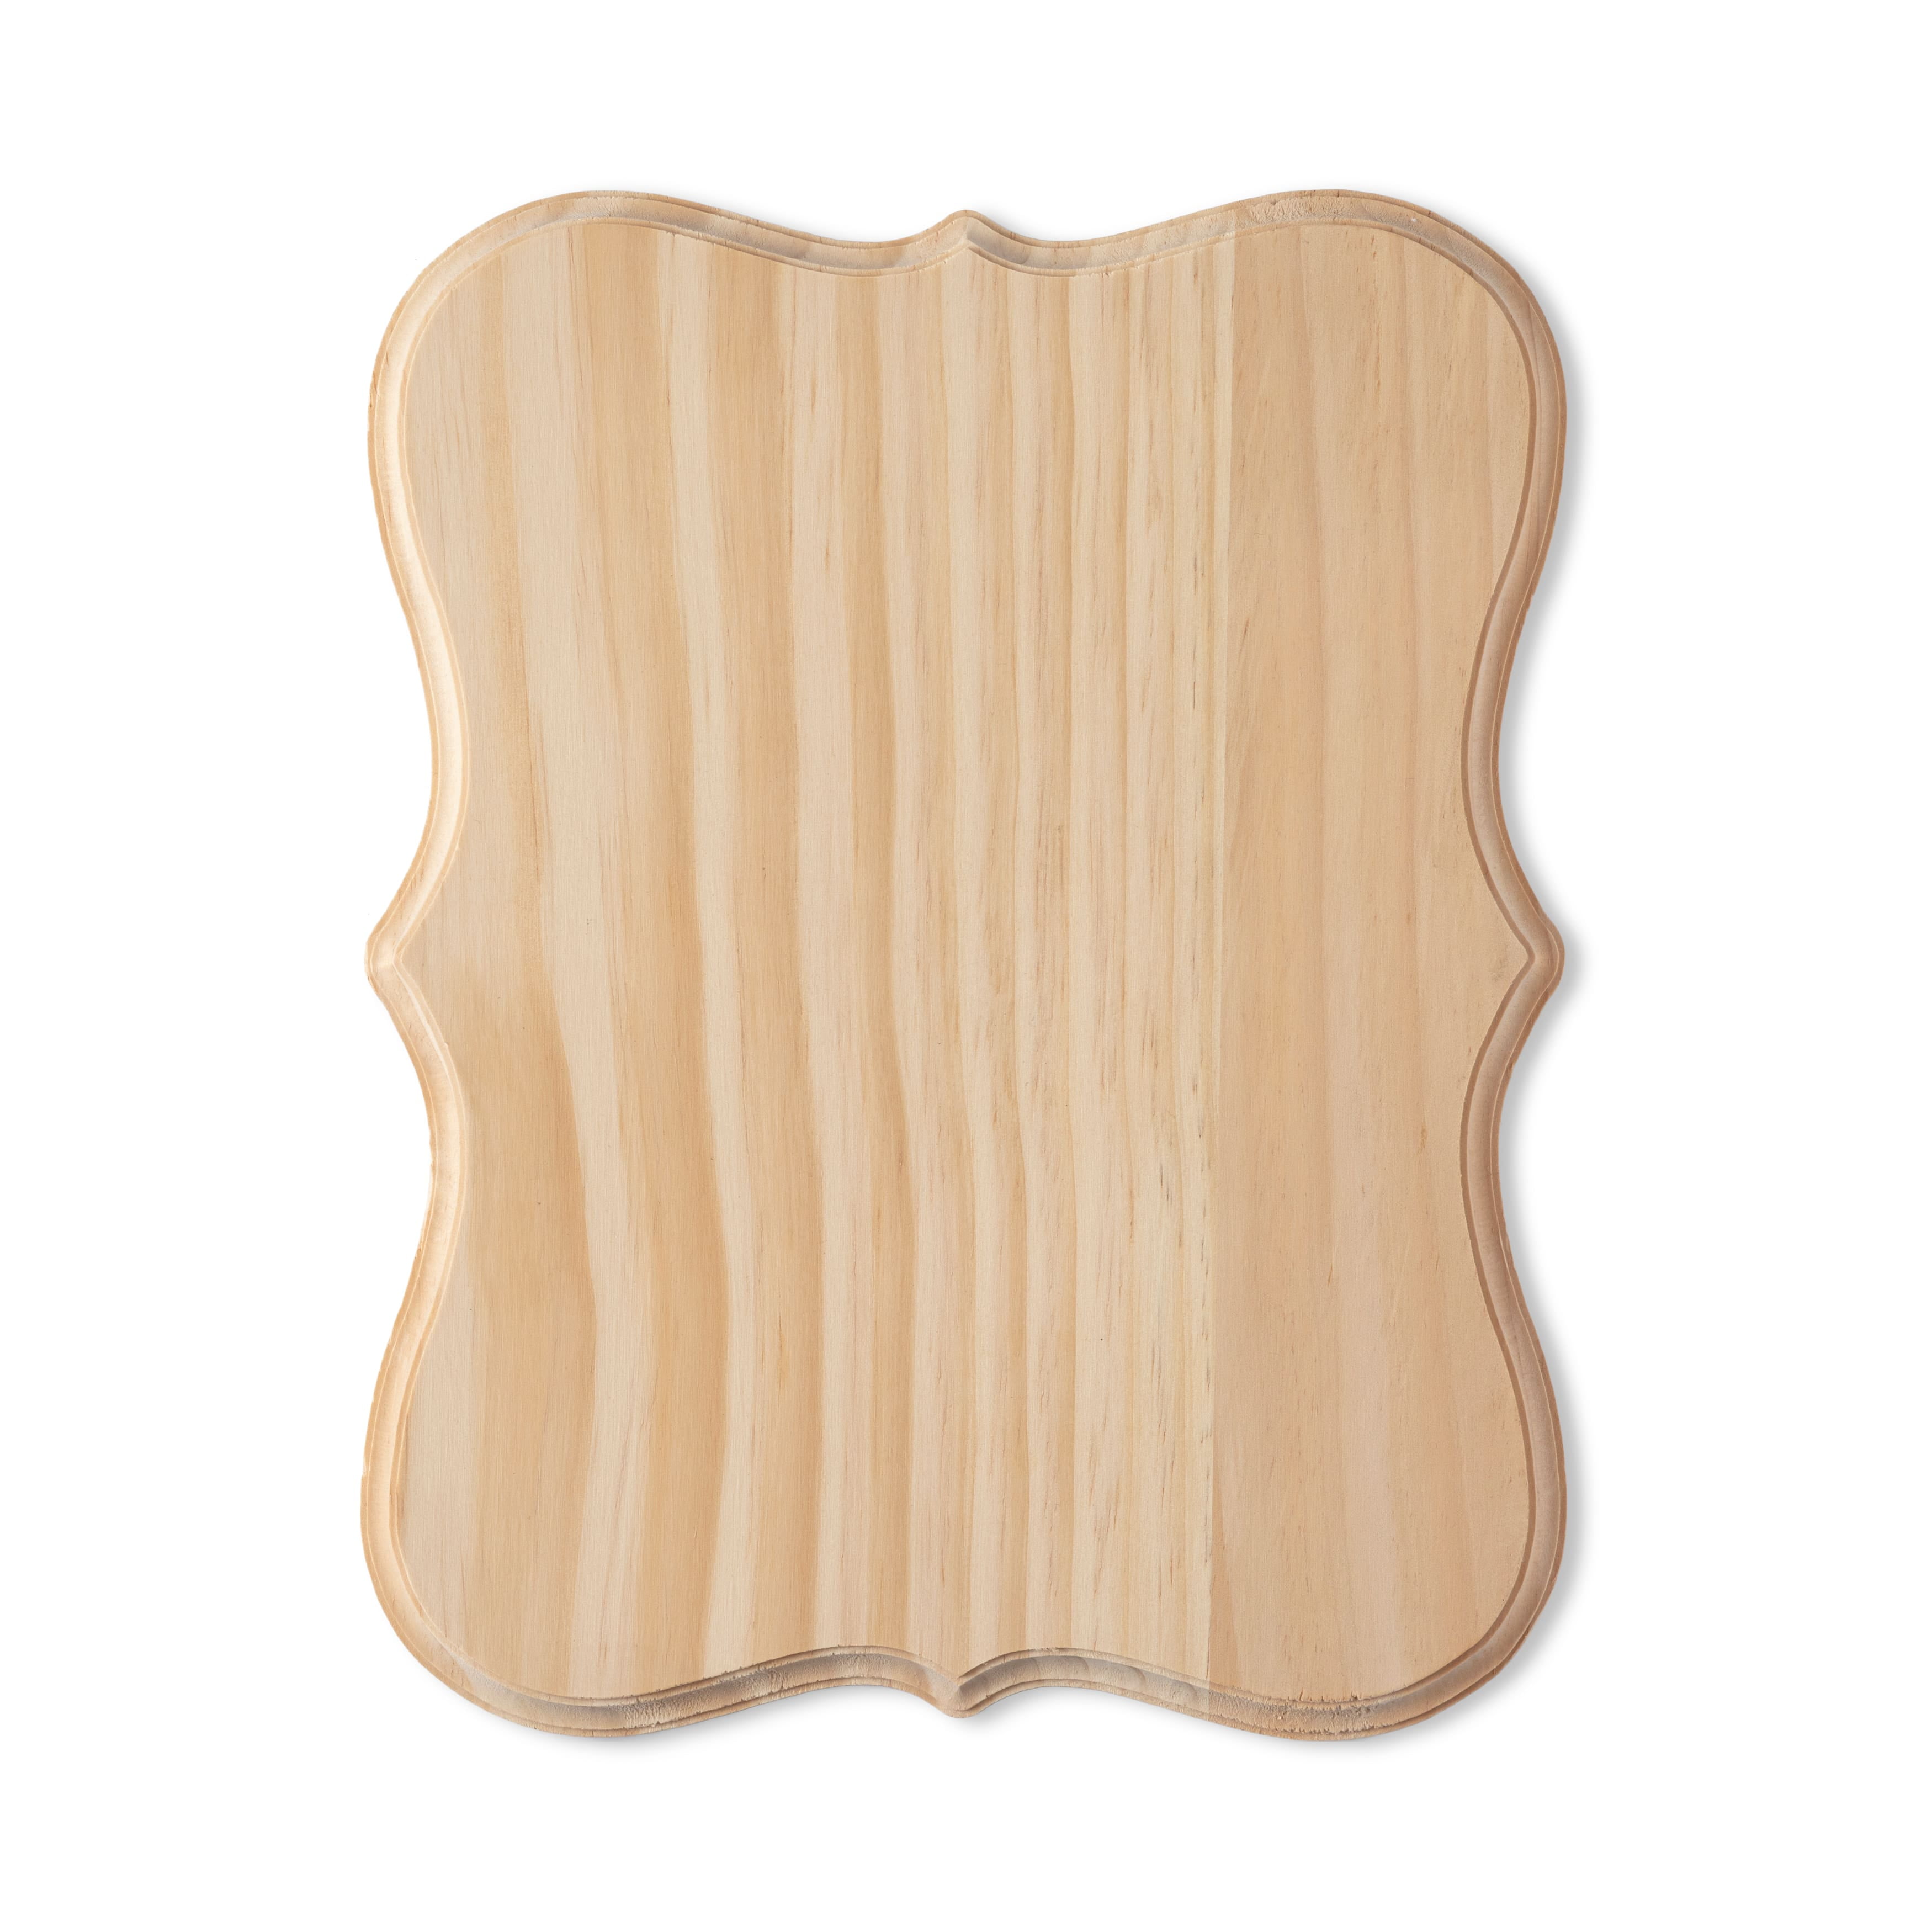 12 x 9 Beveled Wood Parenthesis Plaque by Make Market